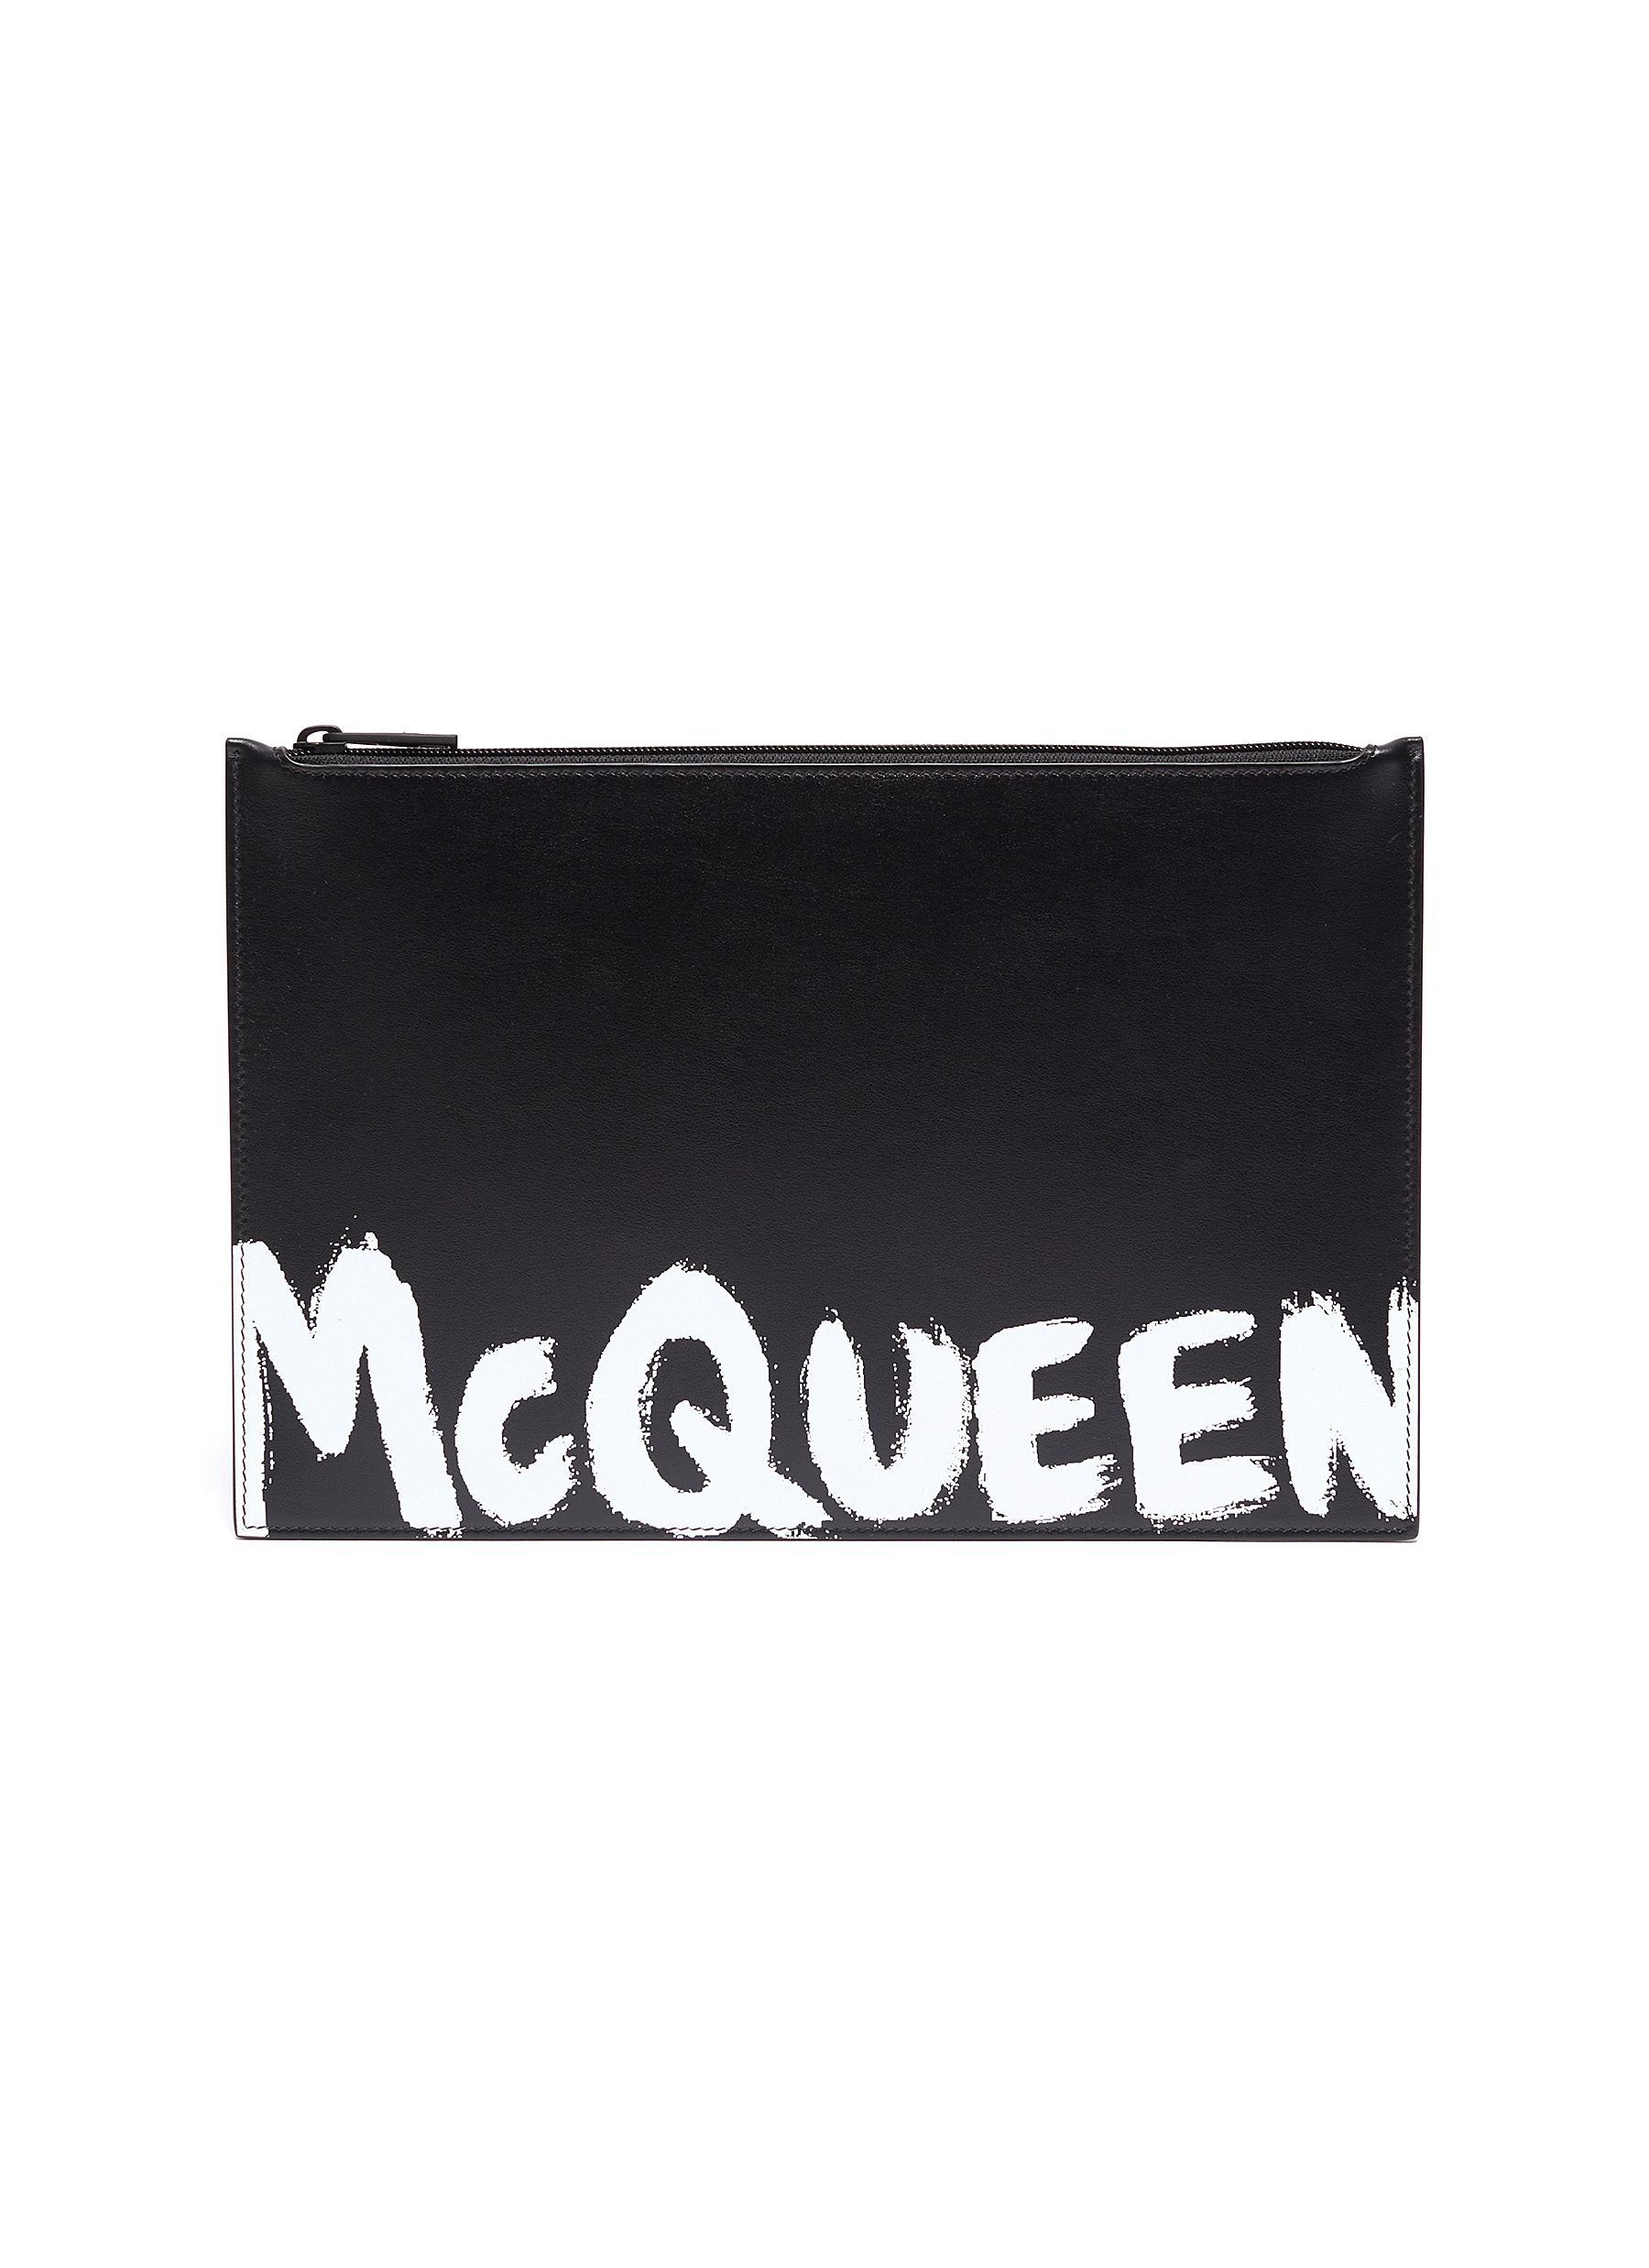 Alexander McQueen Graffiti Flat Zip Leather Pouch in Black for Men - Lyst